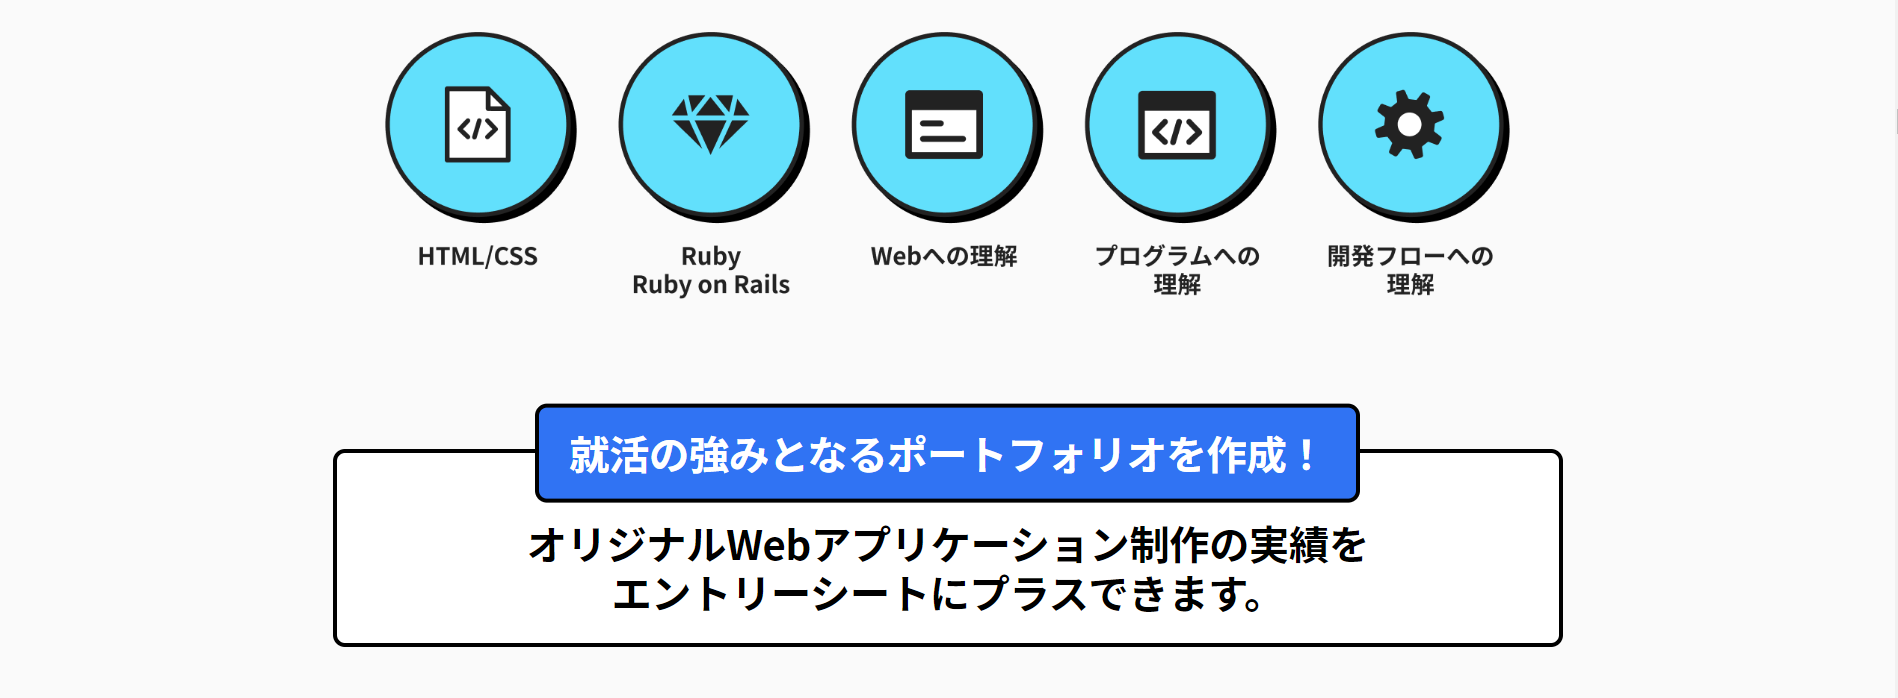 DMM WEBCAMPの就活コースの特徴を示す画像